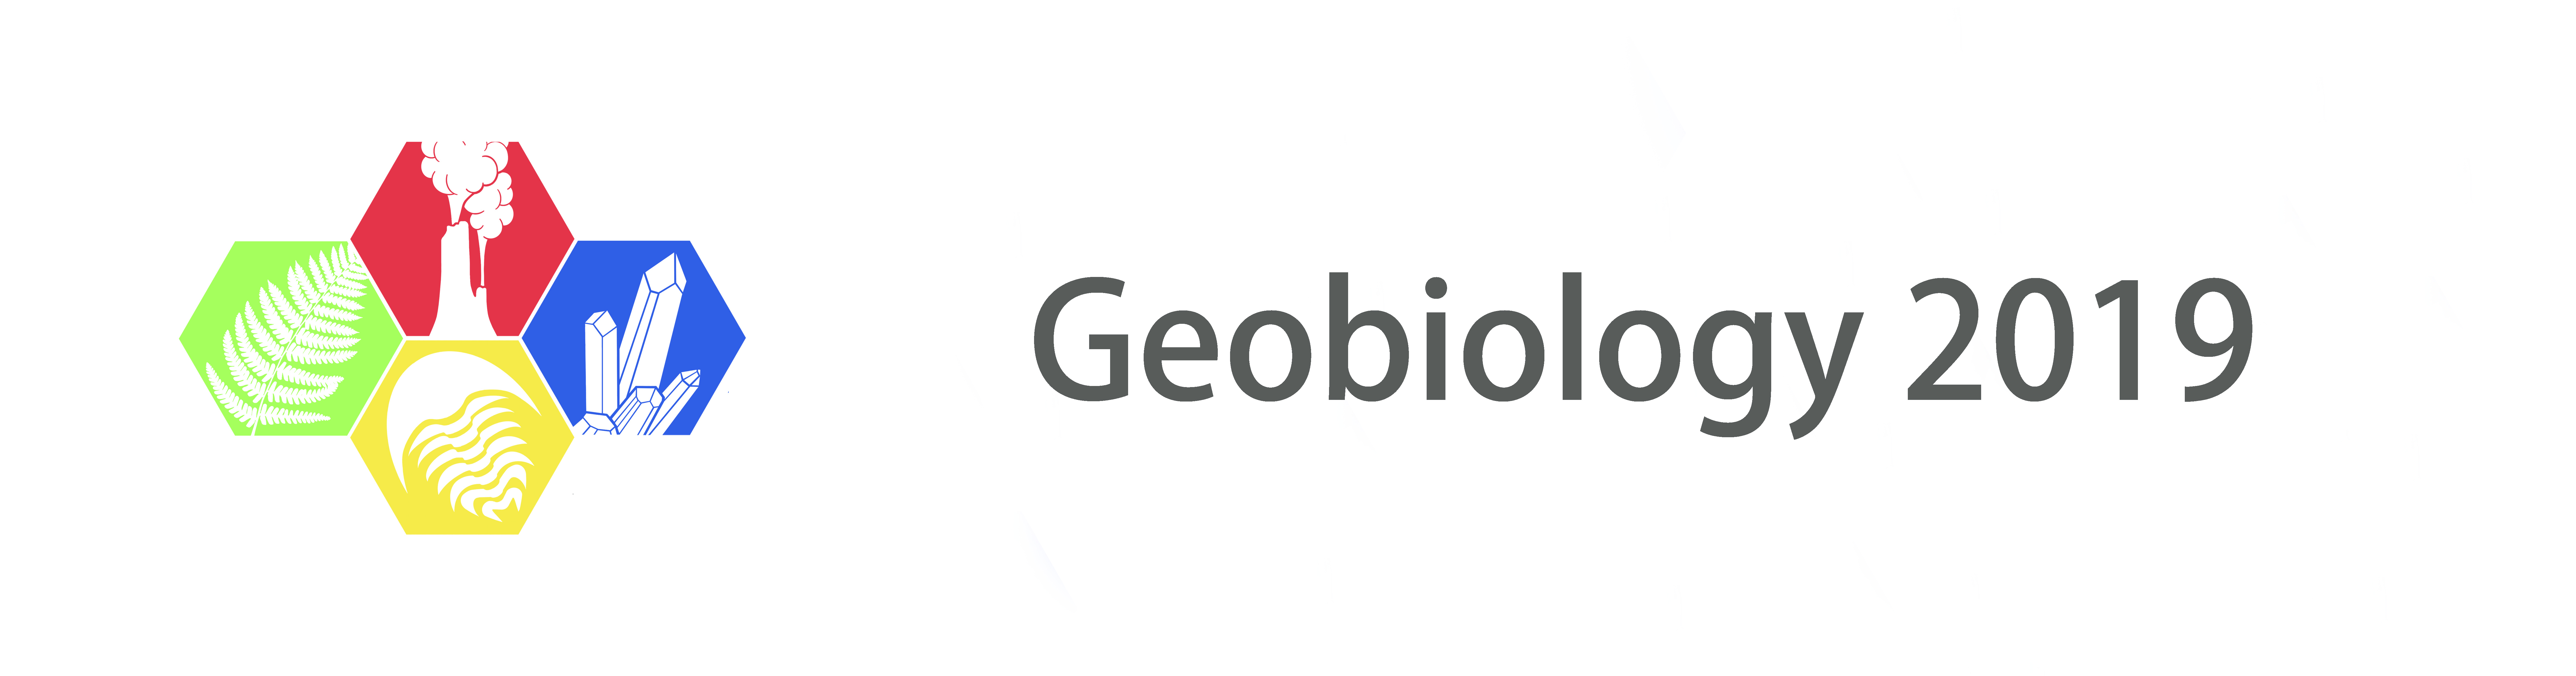 Geobiology 2019 Logo